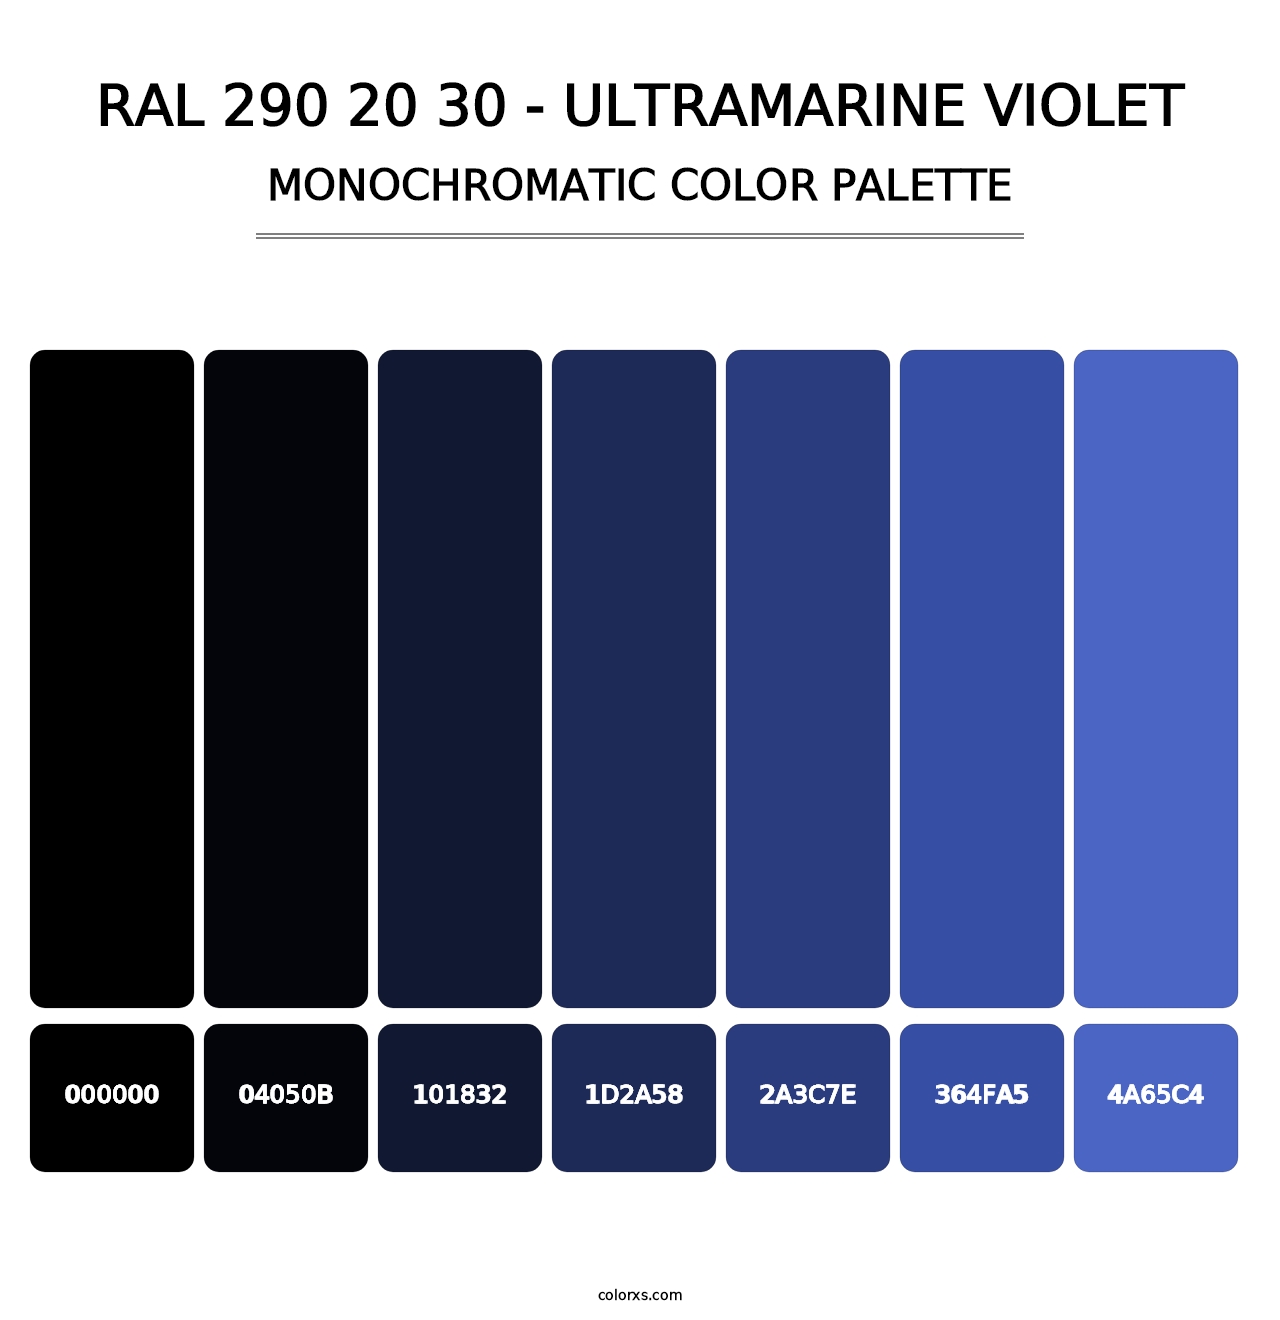 RAL 290 20 30 - Ultramarine Violet - Monochromatic Color Palette